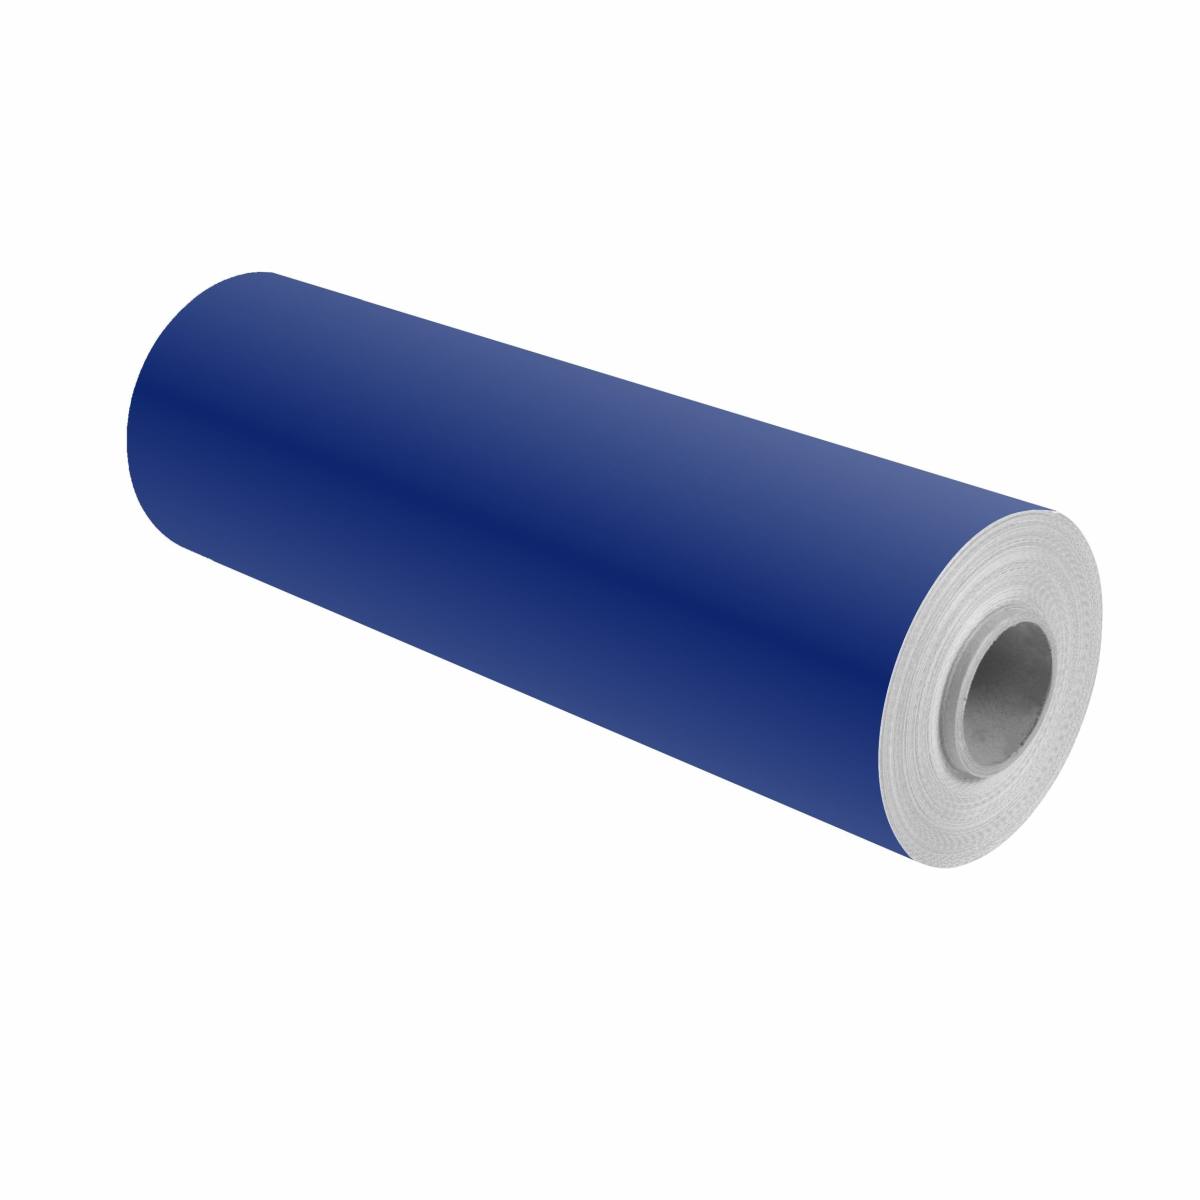 3M Scotchcal pellicola colorata 100-1024 blu reale 1,22m x 50m